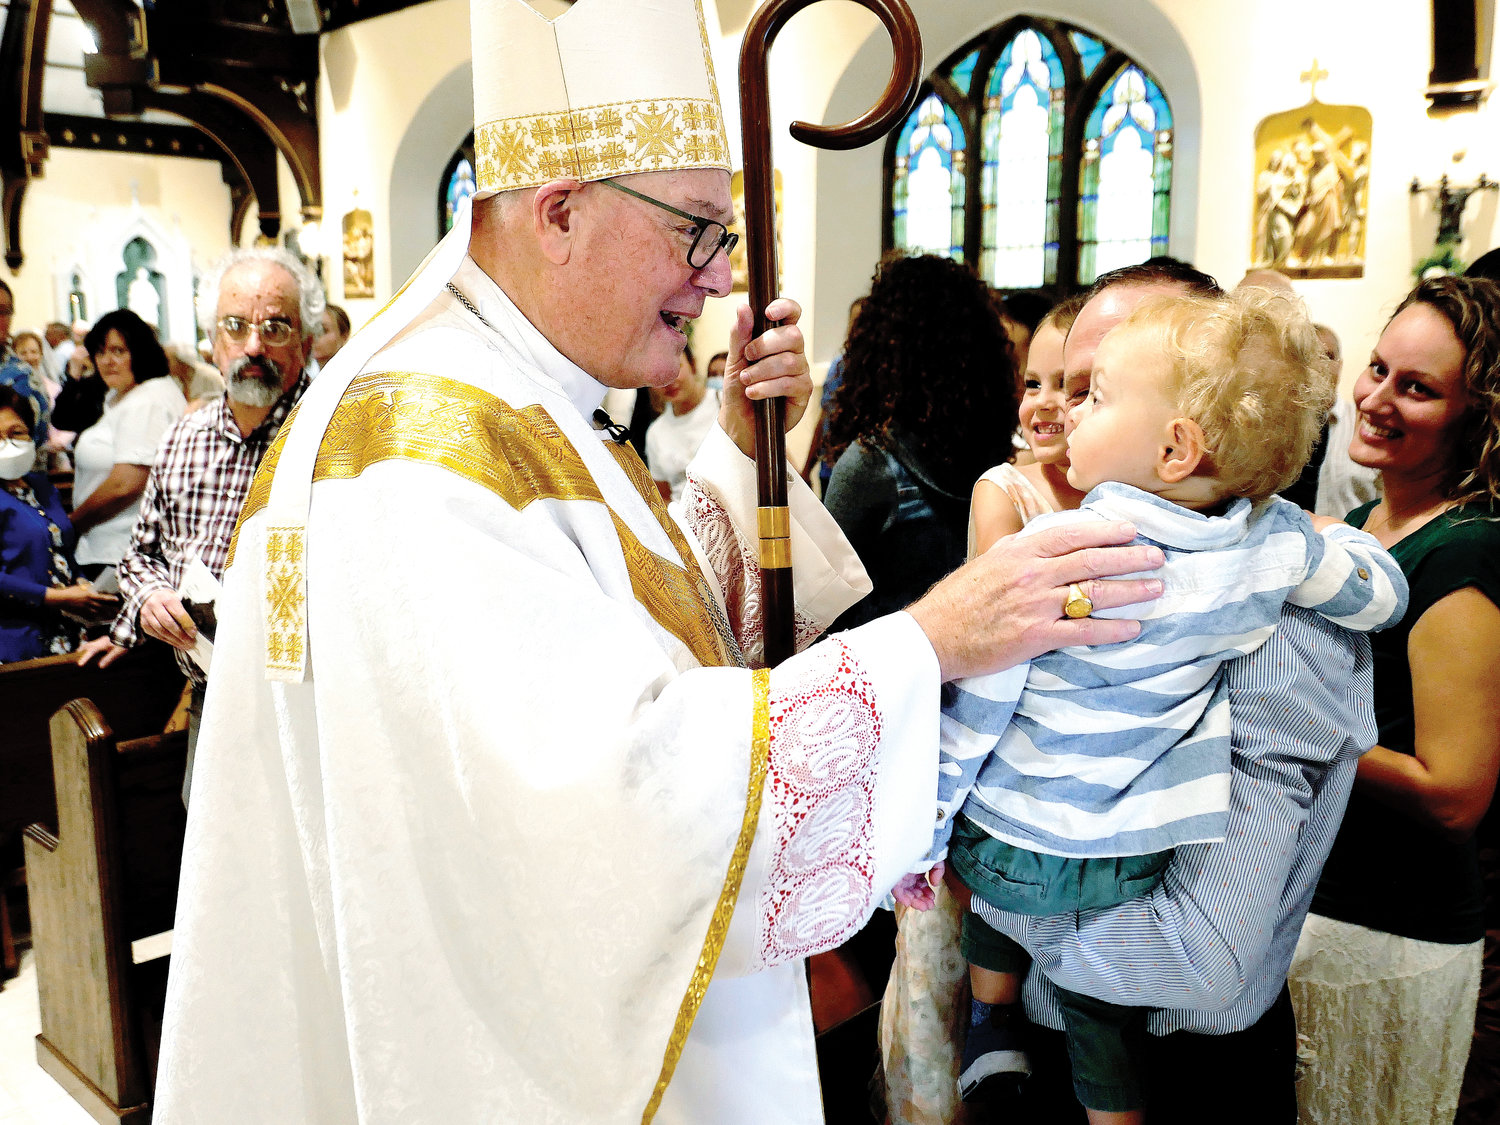 Cardinal Dolan greets a young parishioner.